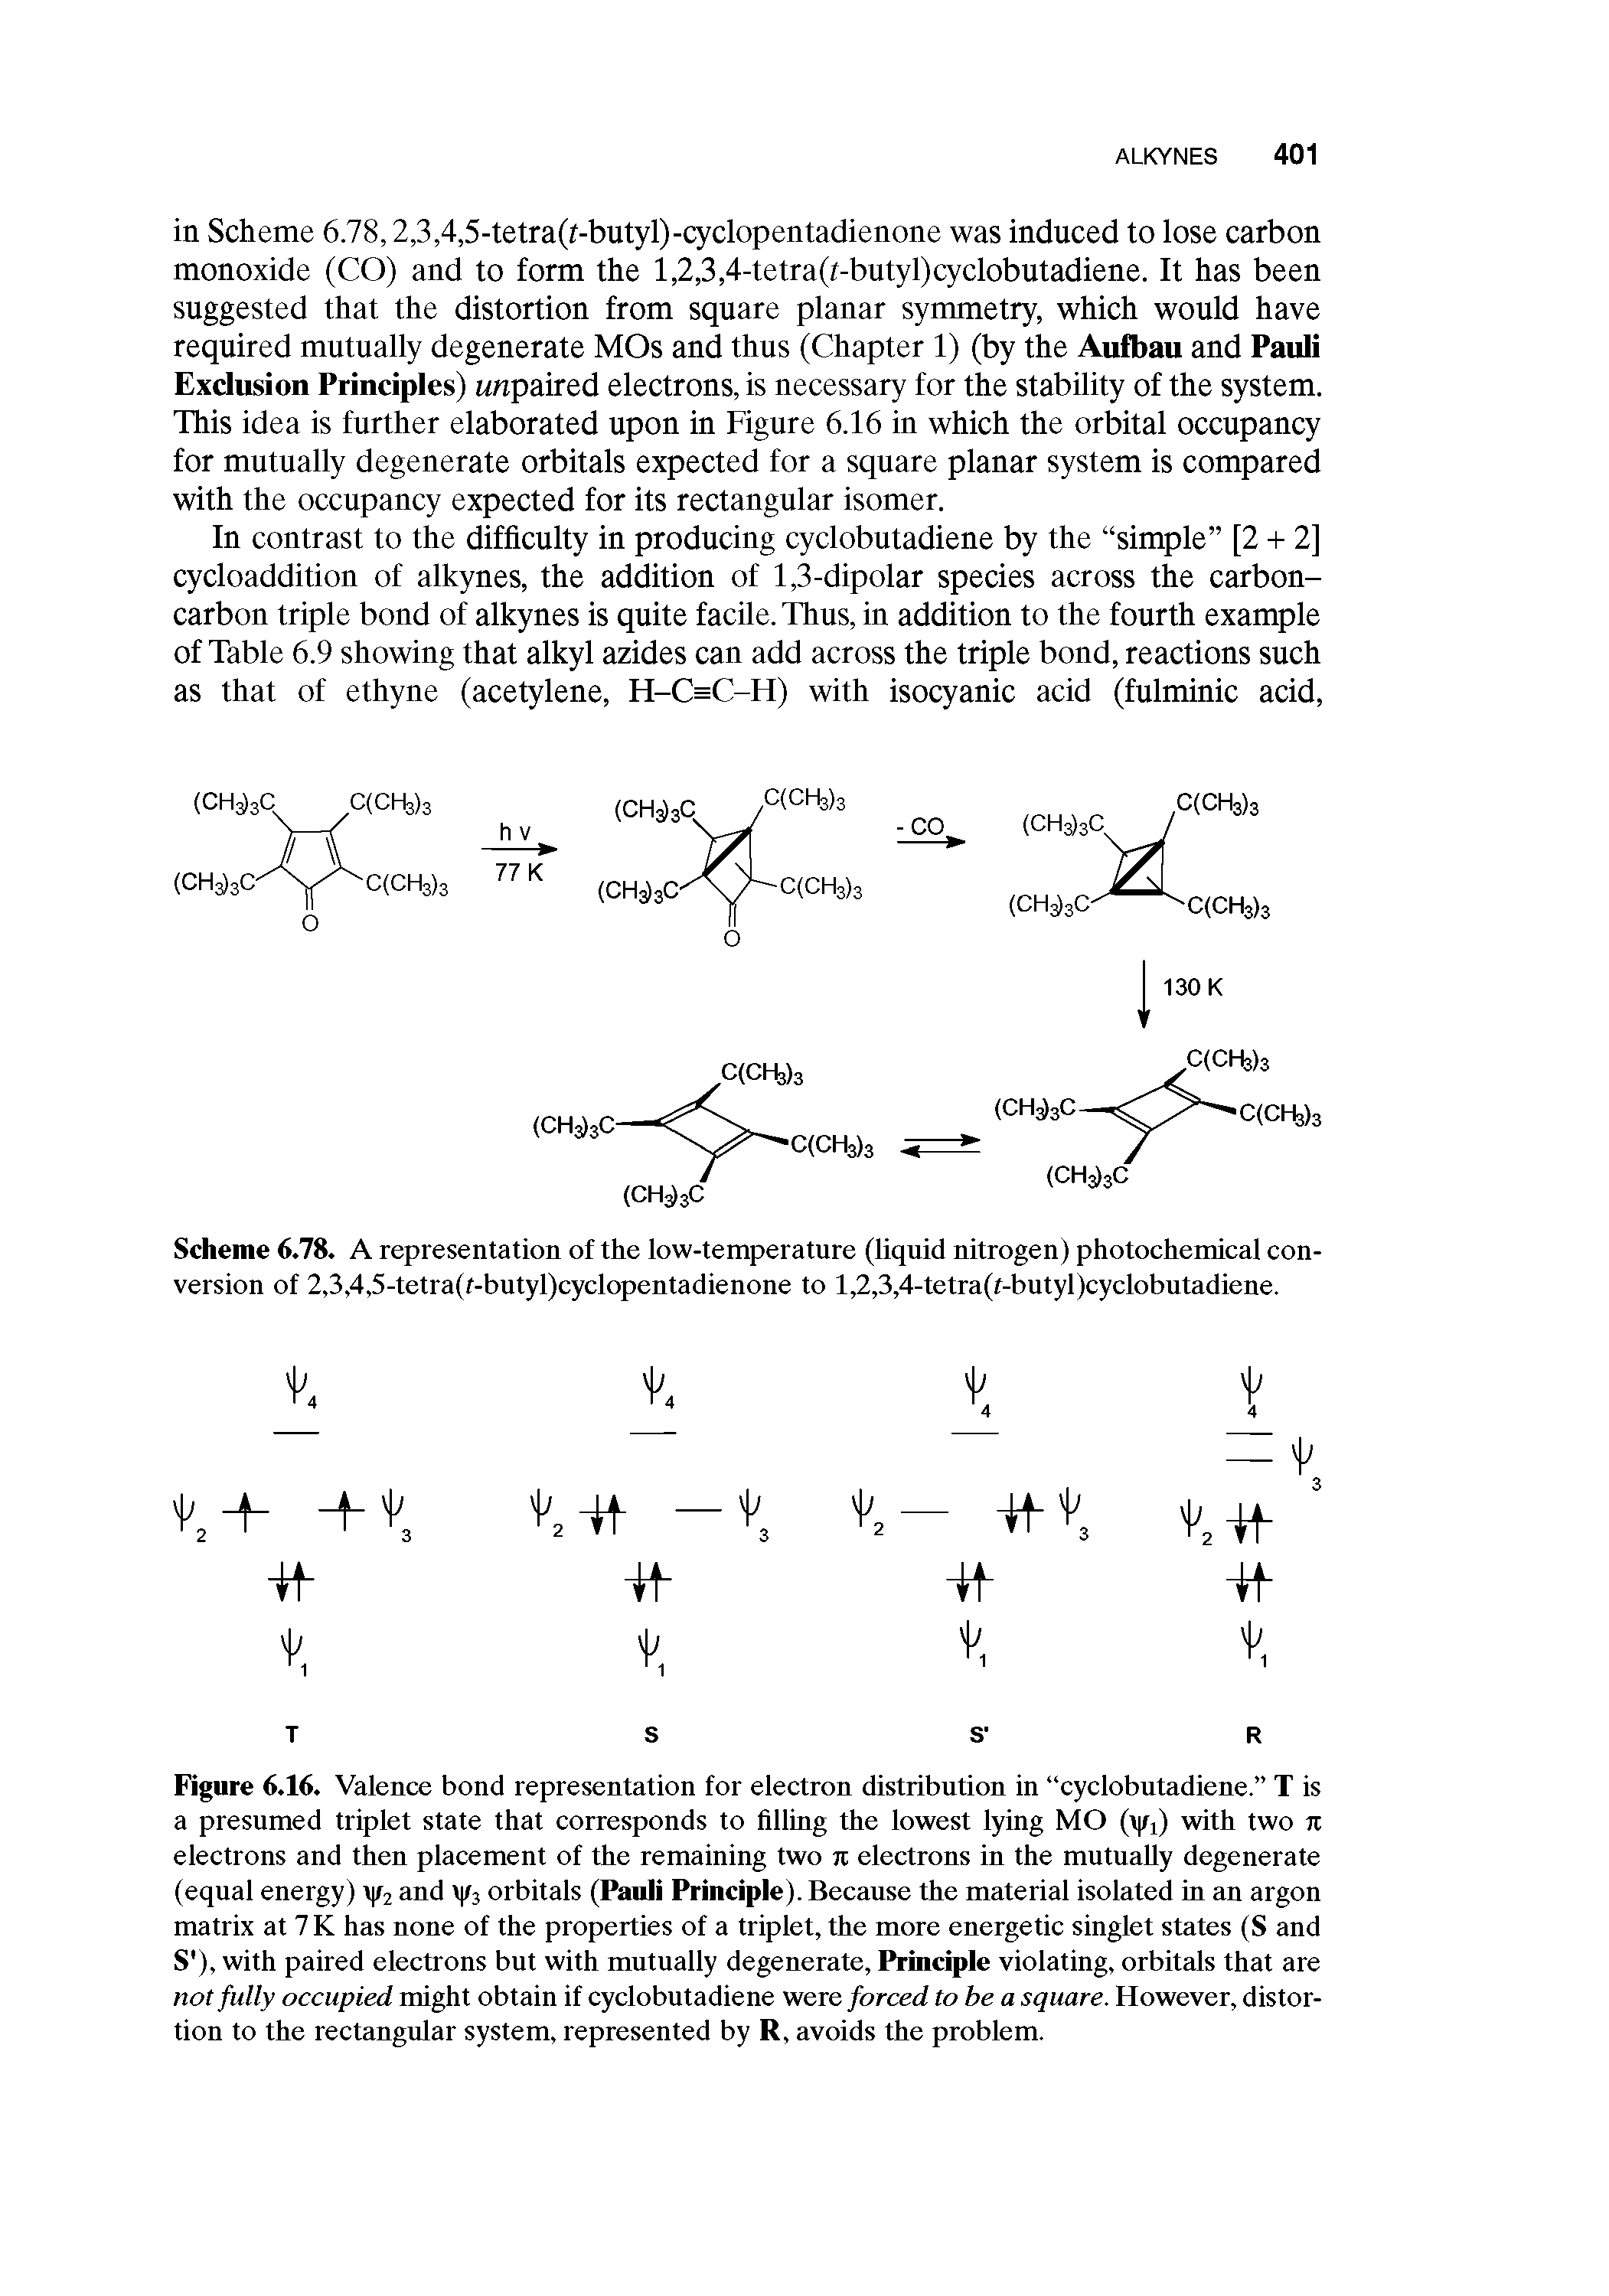 Scheme 6.78. A representation of the low-temperature (Uquid nitrogen) photochemical conversion of 2,3,4,5-tetra(f-butyl)cyclopentadienone to l,2,3,4-tetra(i-butyl)cyclobntadiene.